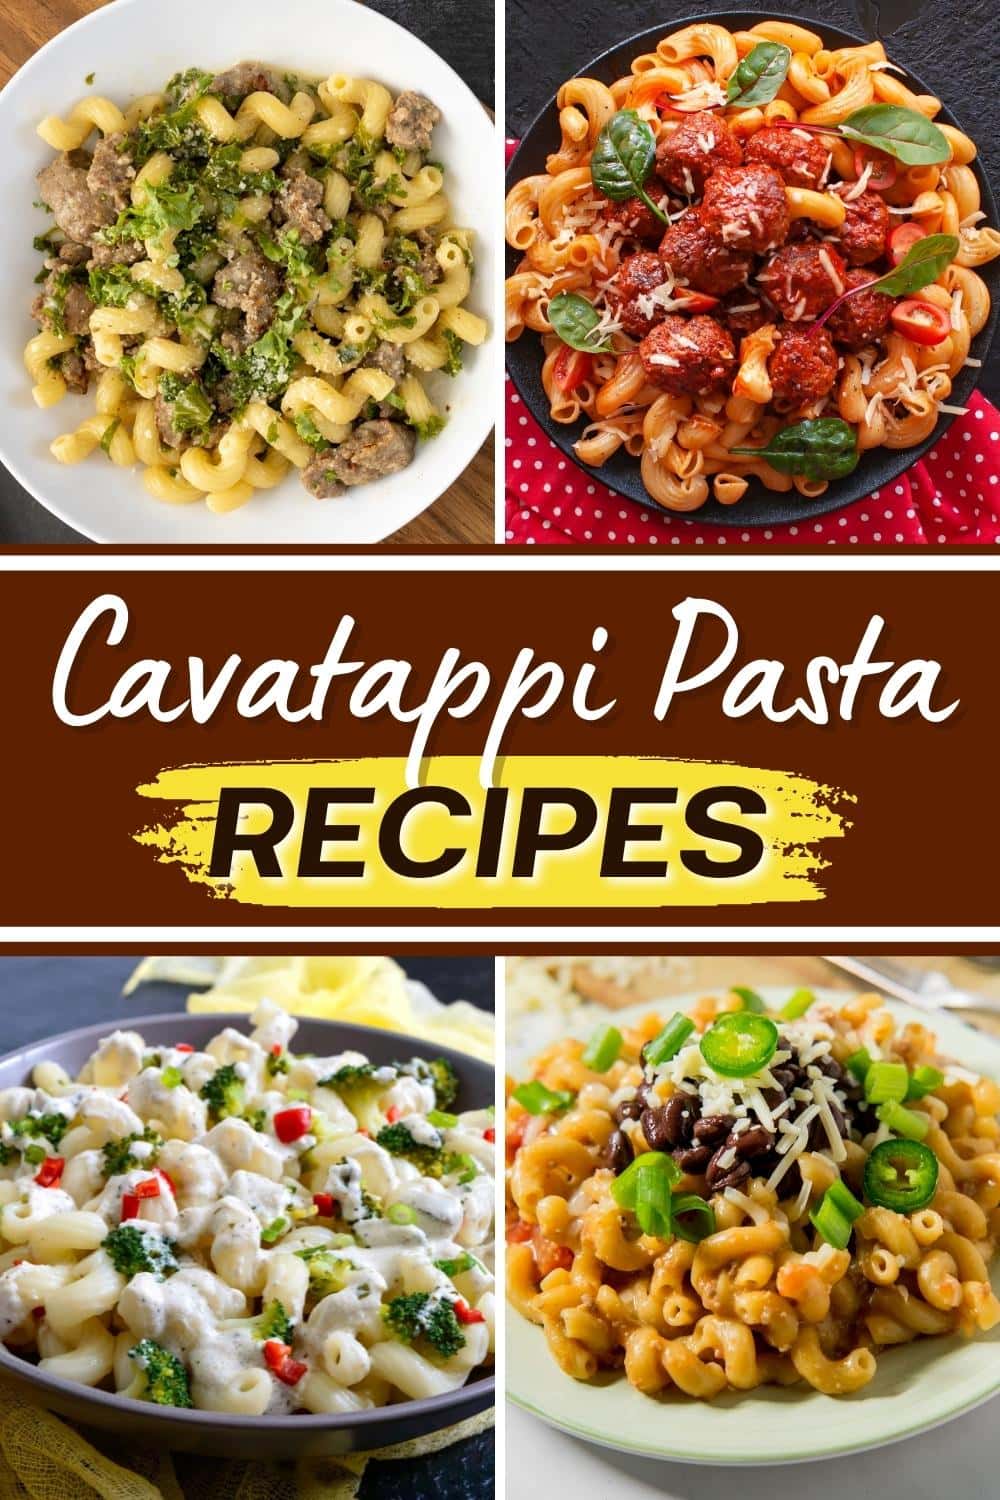 10 Best Cavatappi Pasta Recipes - Insanely Good